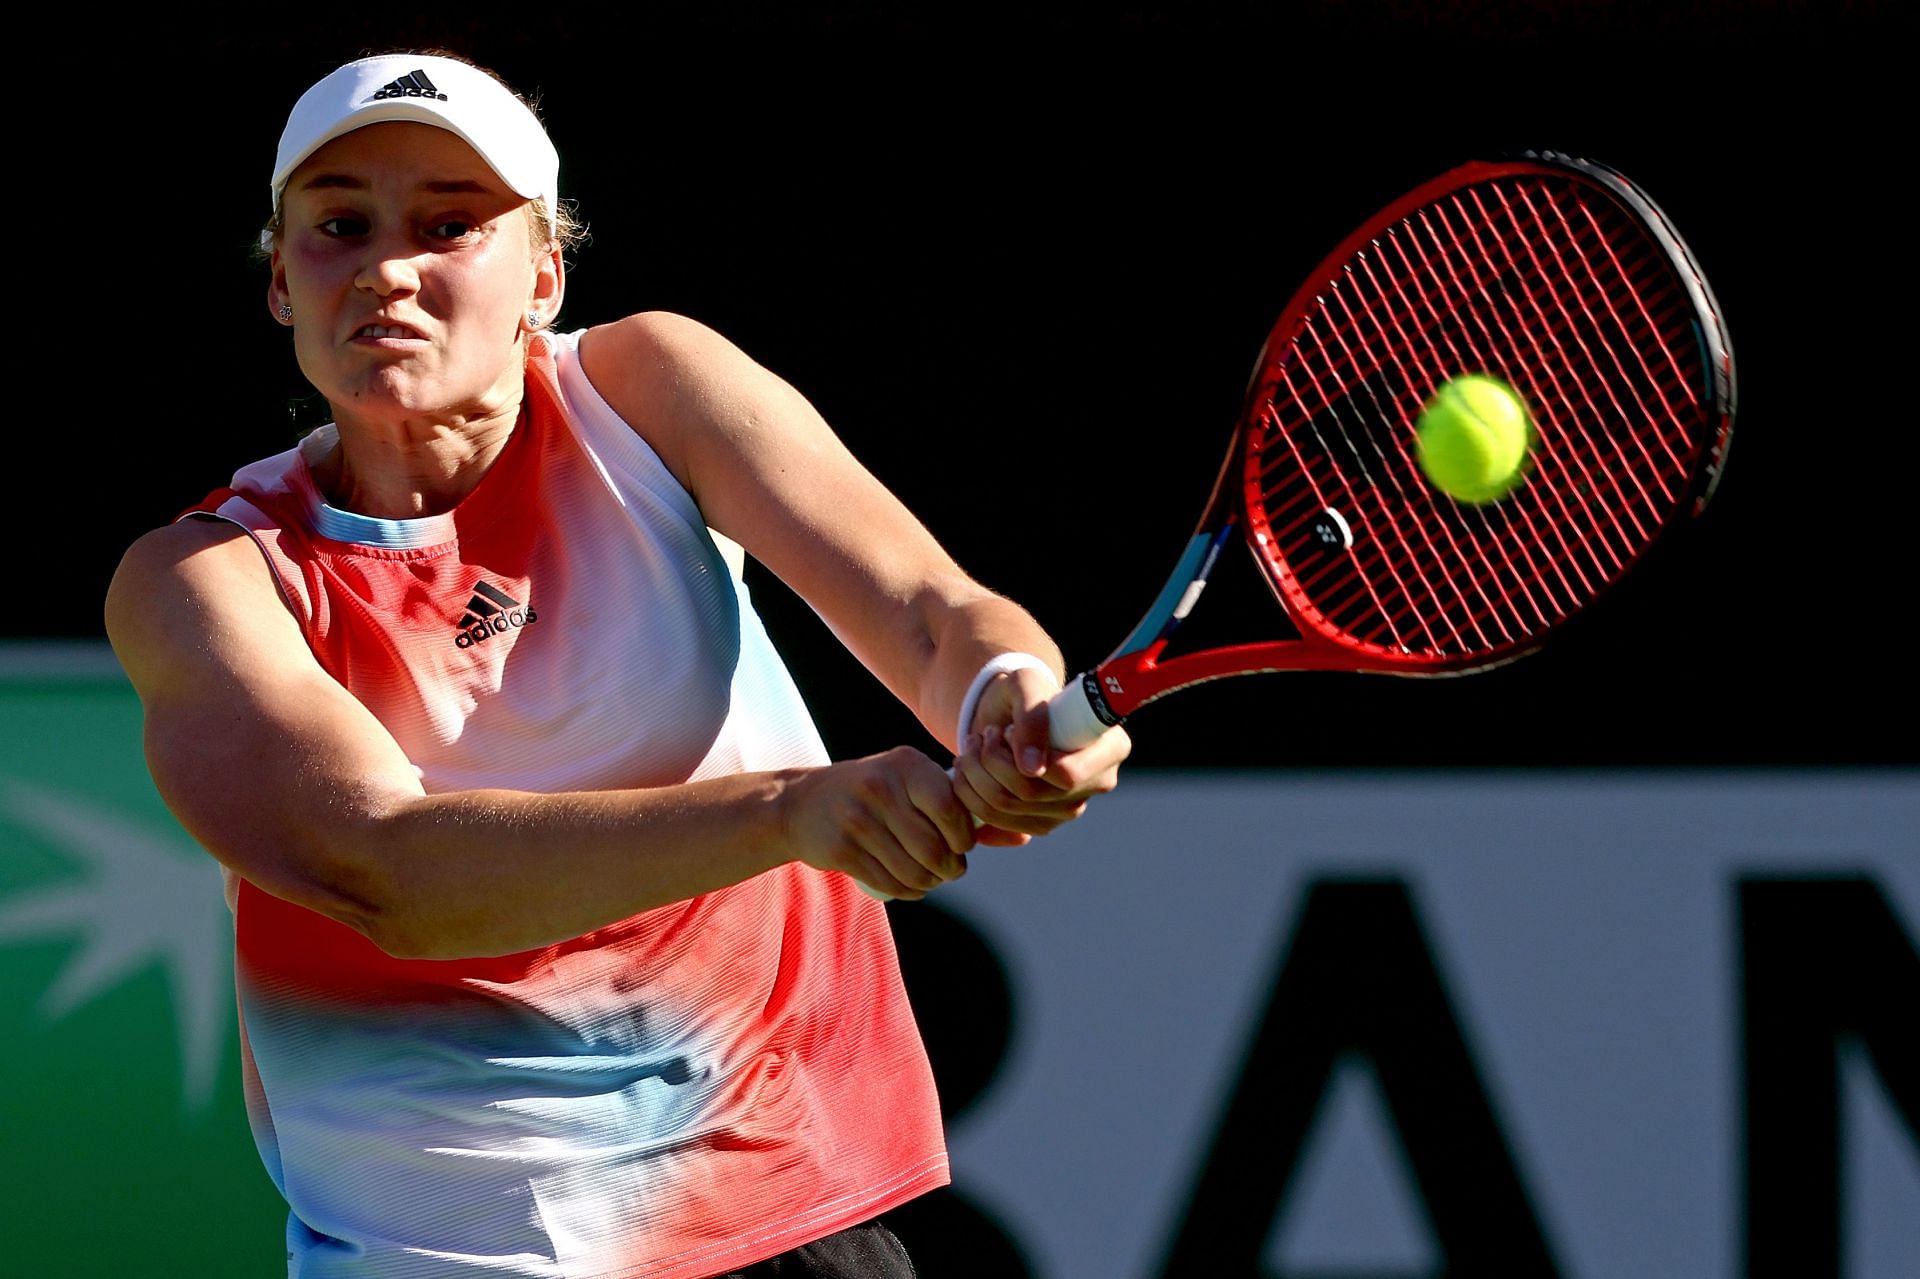 Elena Rybakina strikes the ball against Victoria Azarenka at the BNP Paribas Open